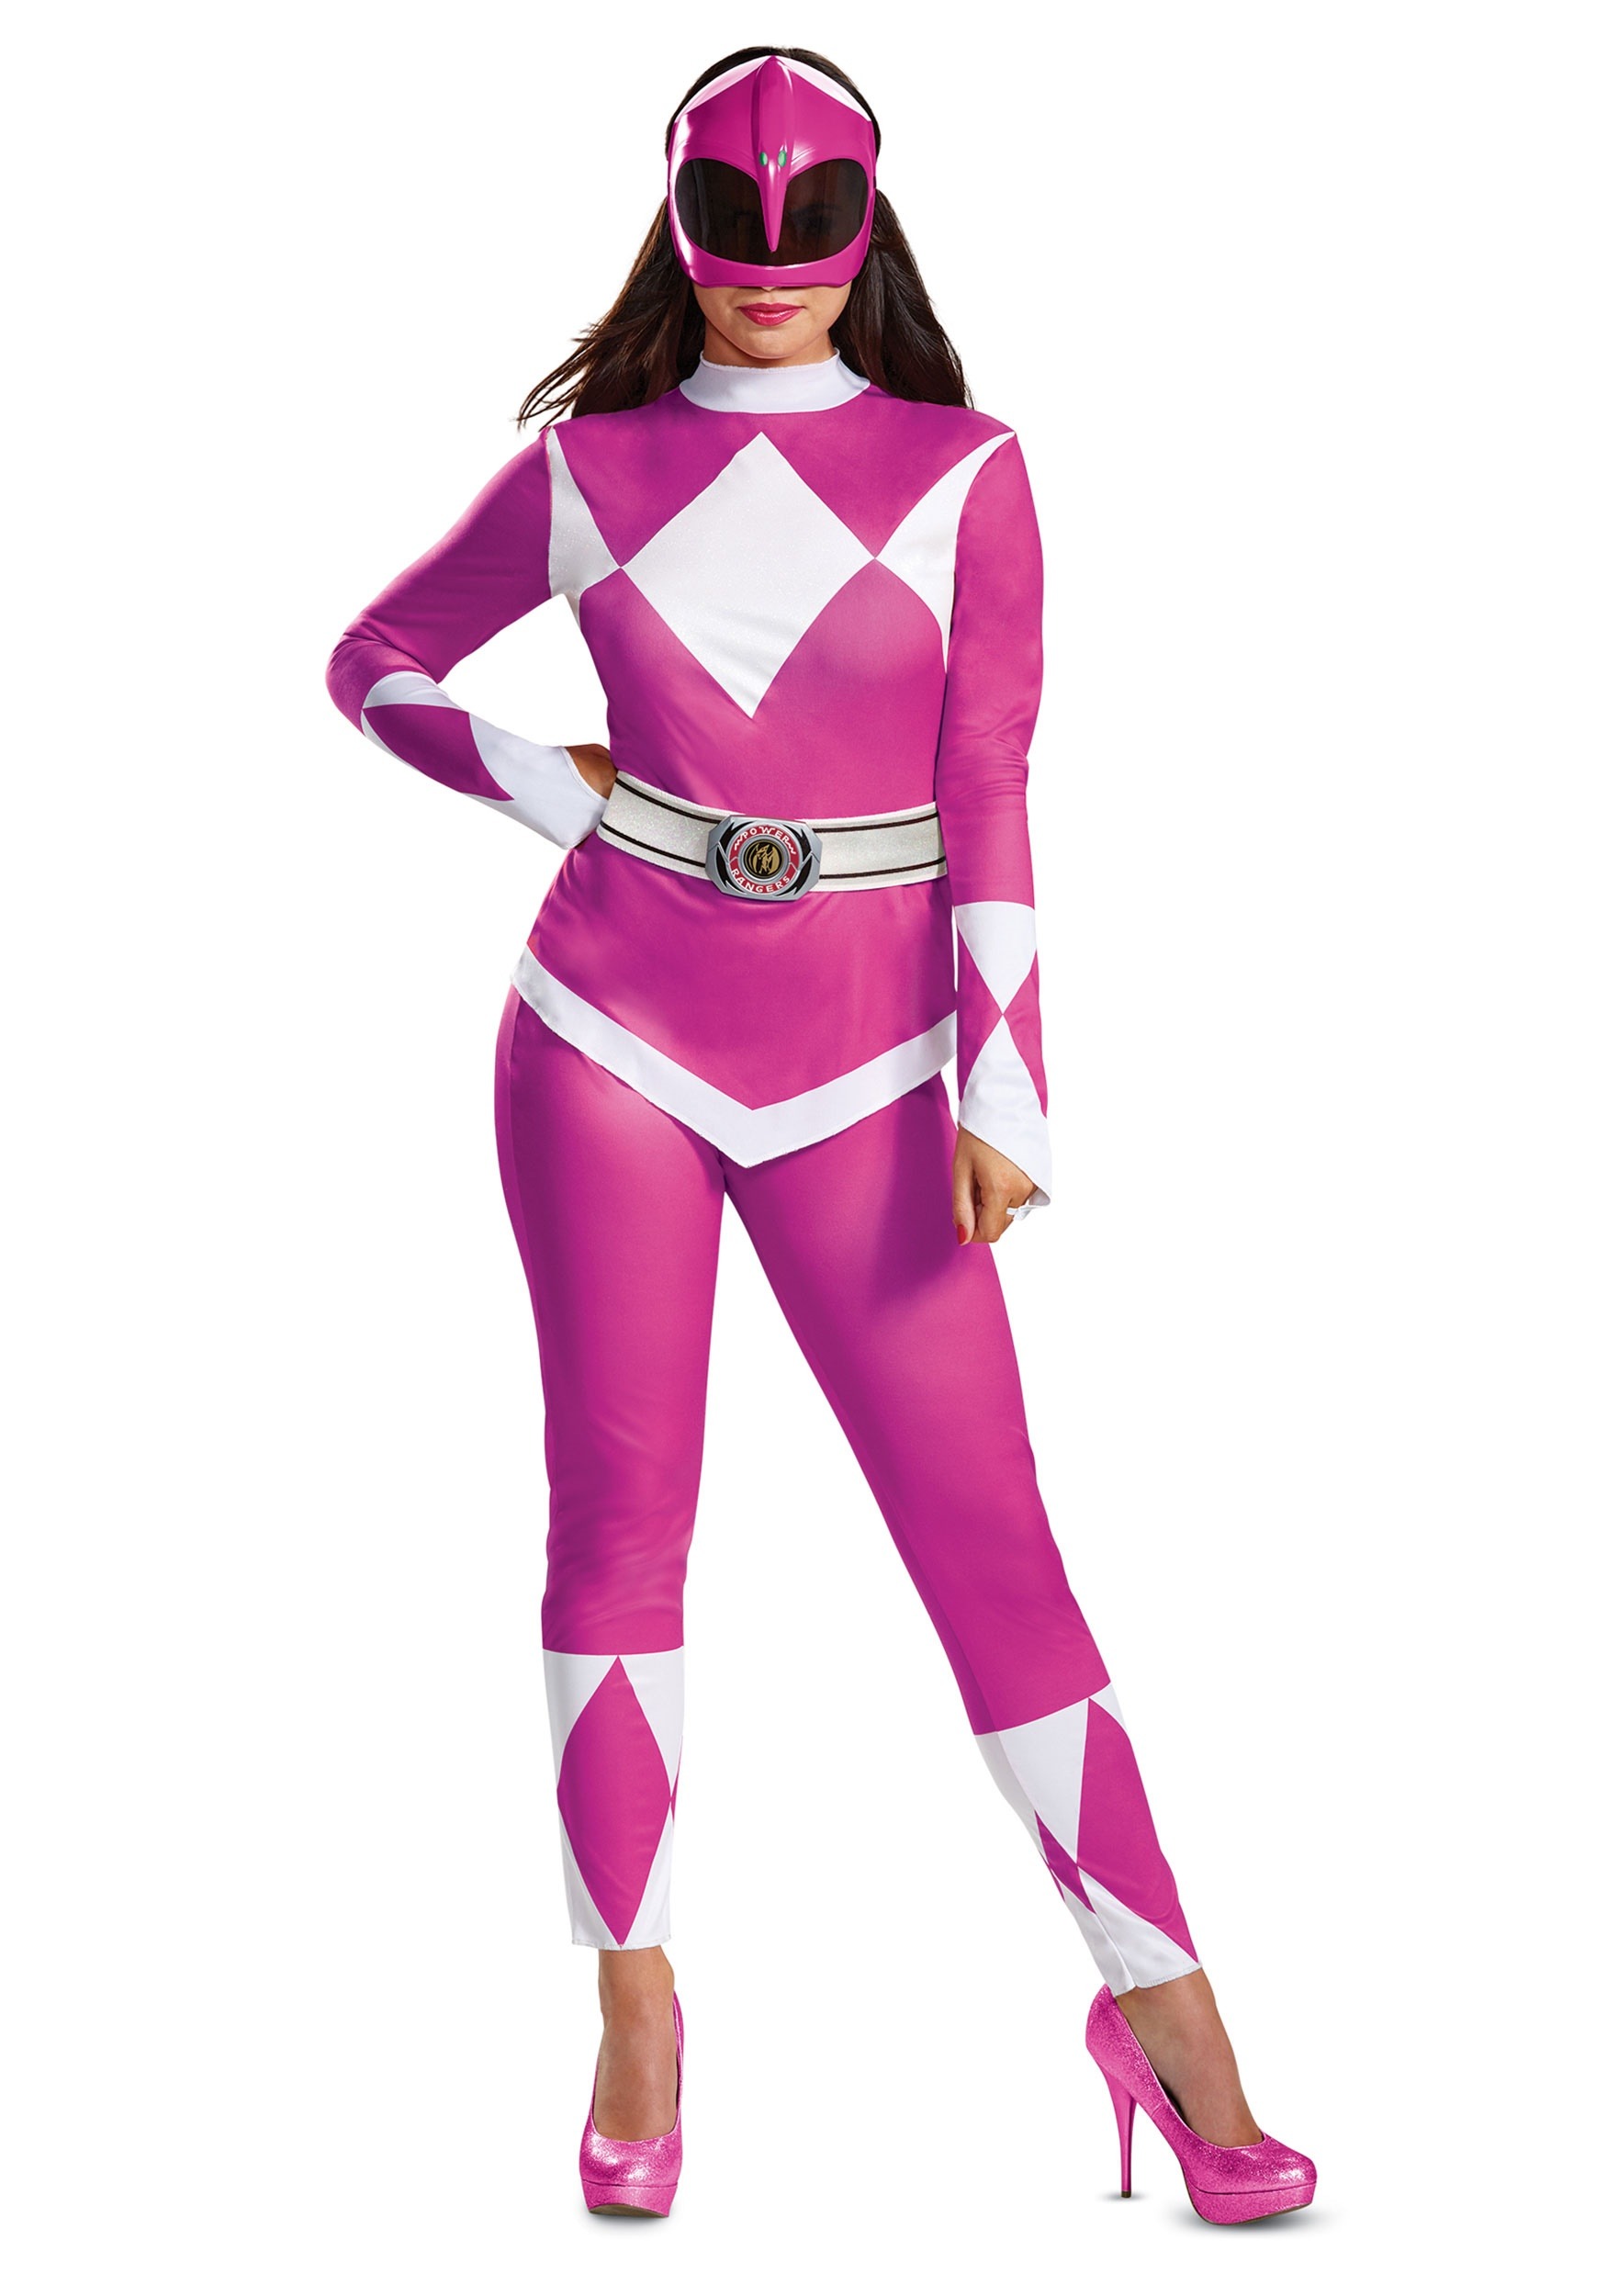 Disguise Power Rangers Pink Ranger Costume for Women from Fun.com Fandom.